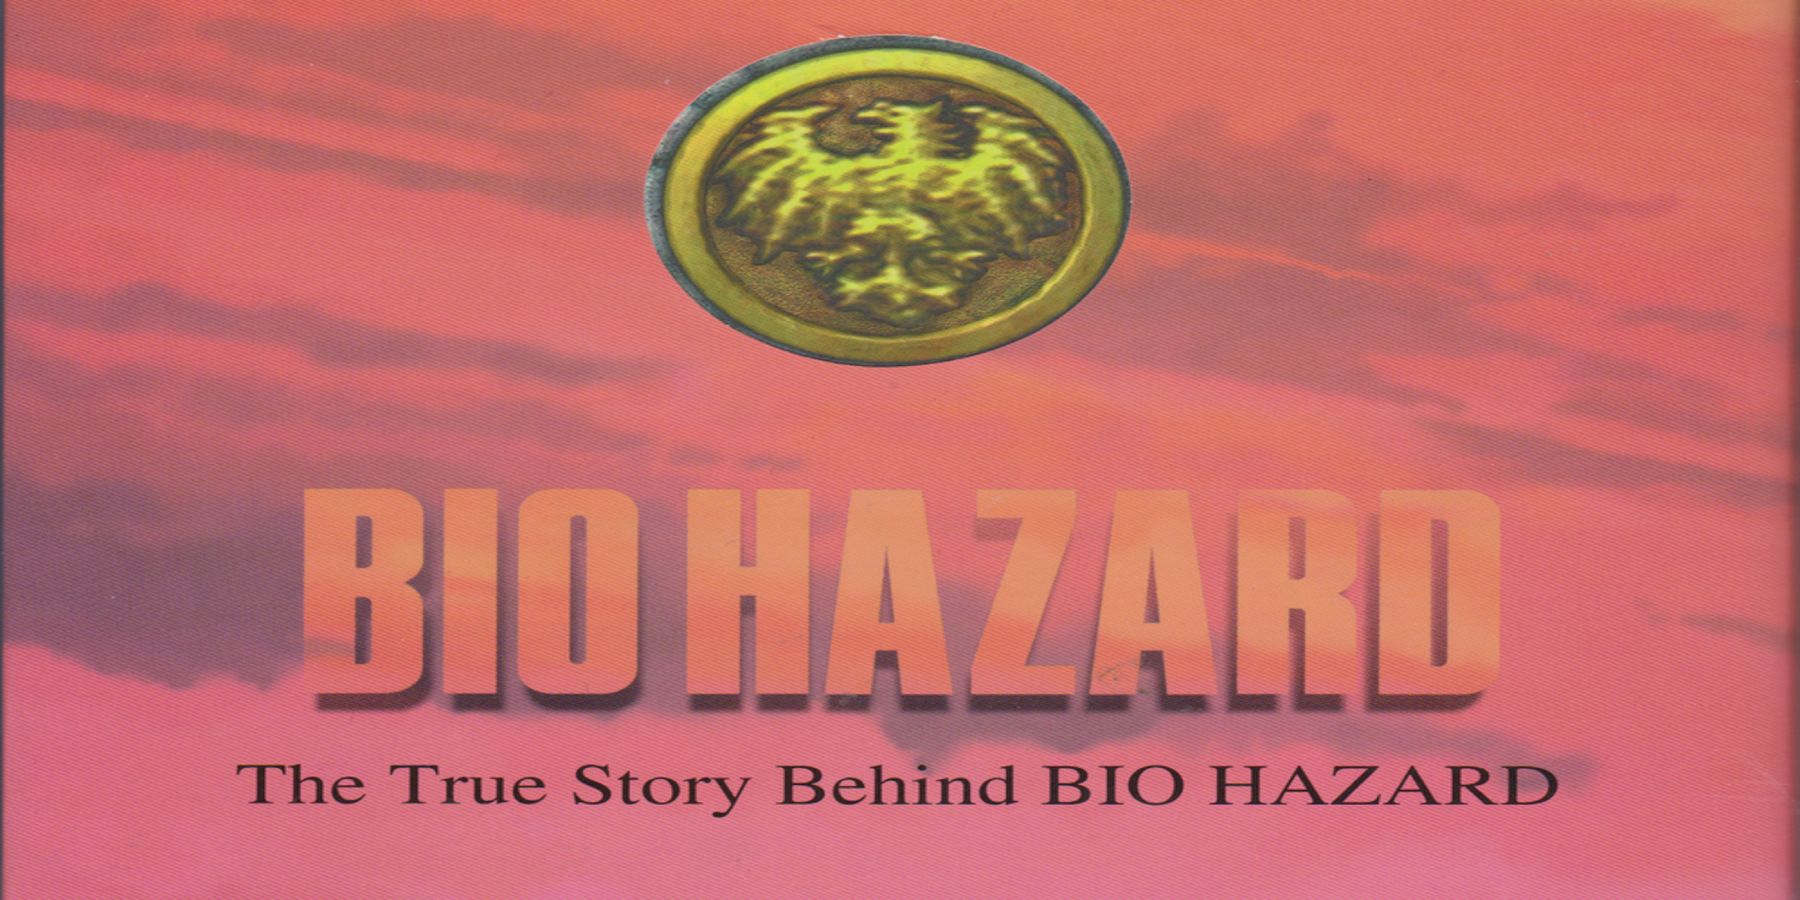 resident evil the true story behind biohazard